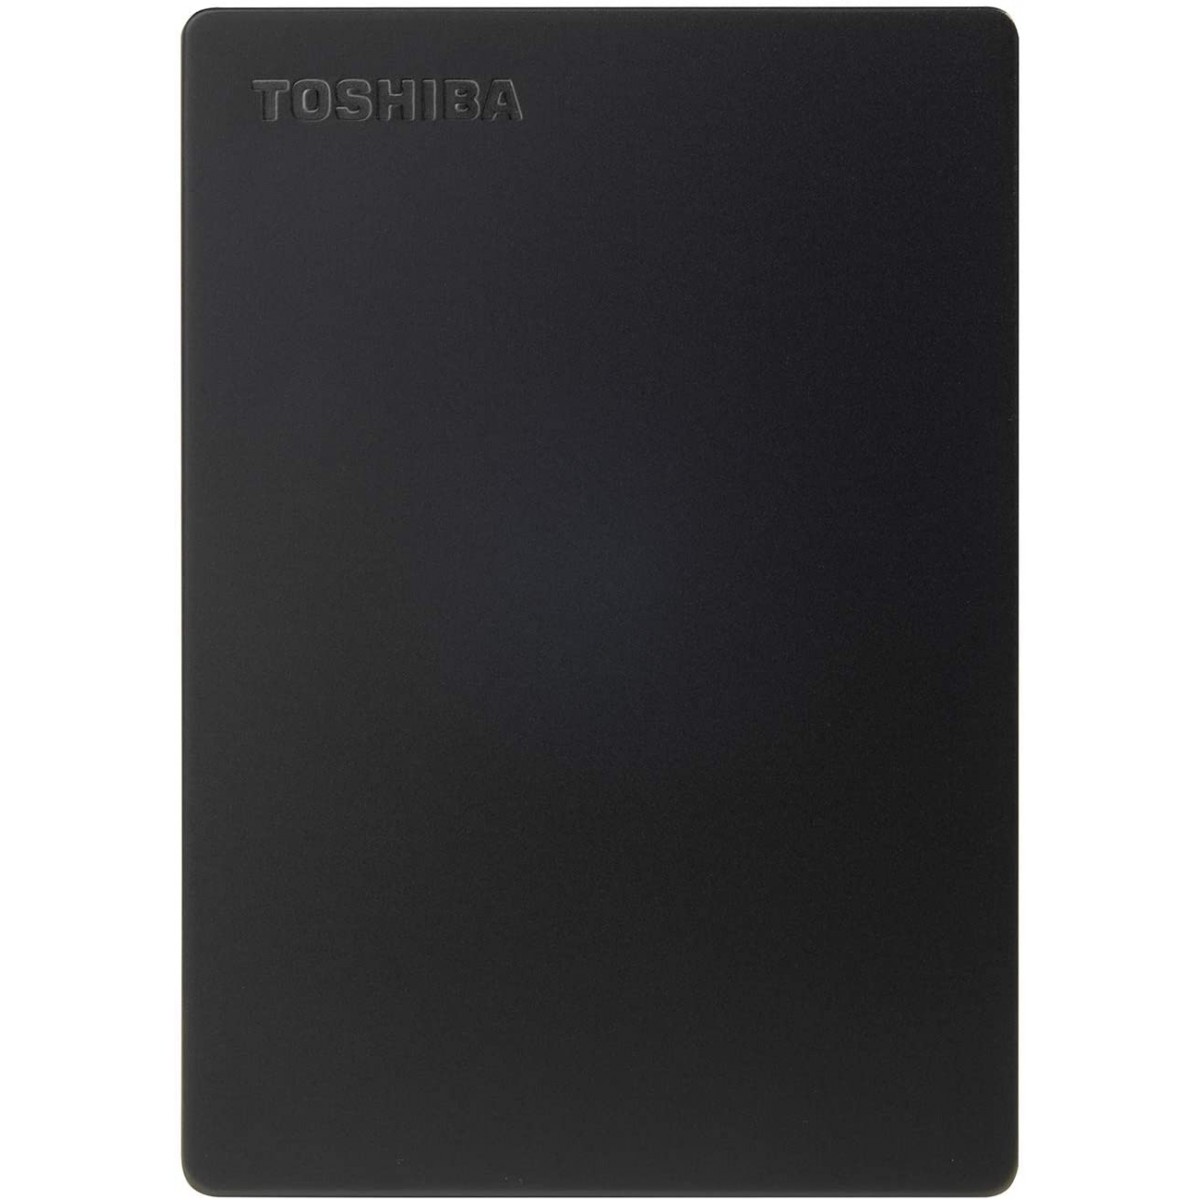 HD Externo Portátil Toshiba Canvio Slim 1TB USB 3.0, Black, HDTD310XK3DA